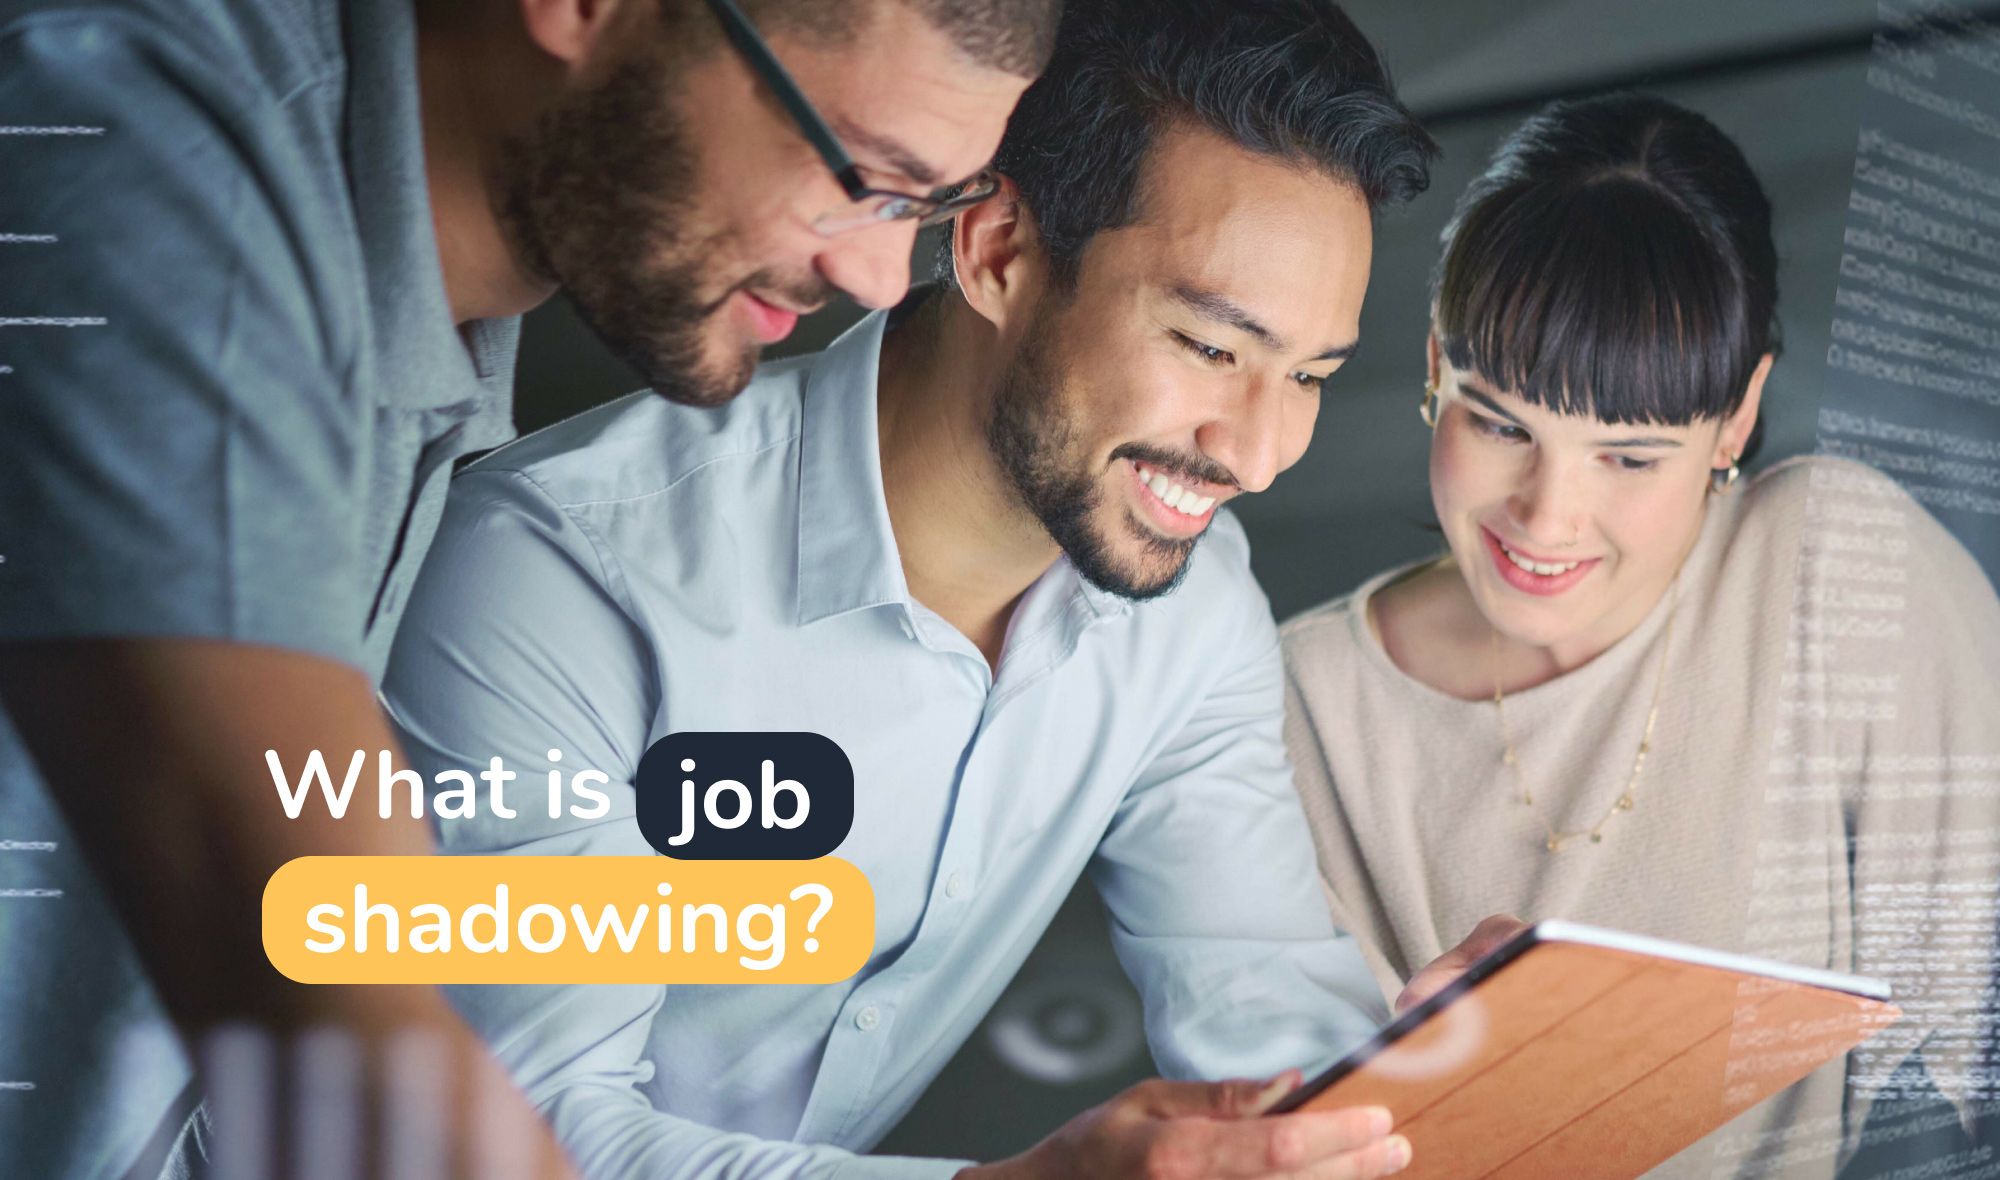 Virtual job shadow: What is job shadowing?